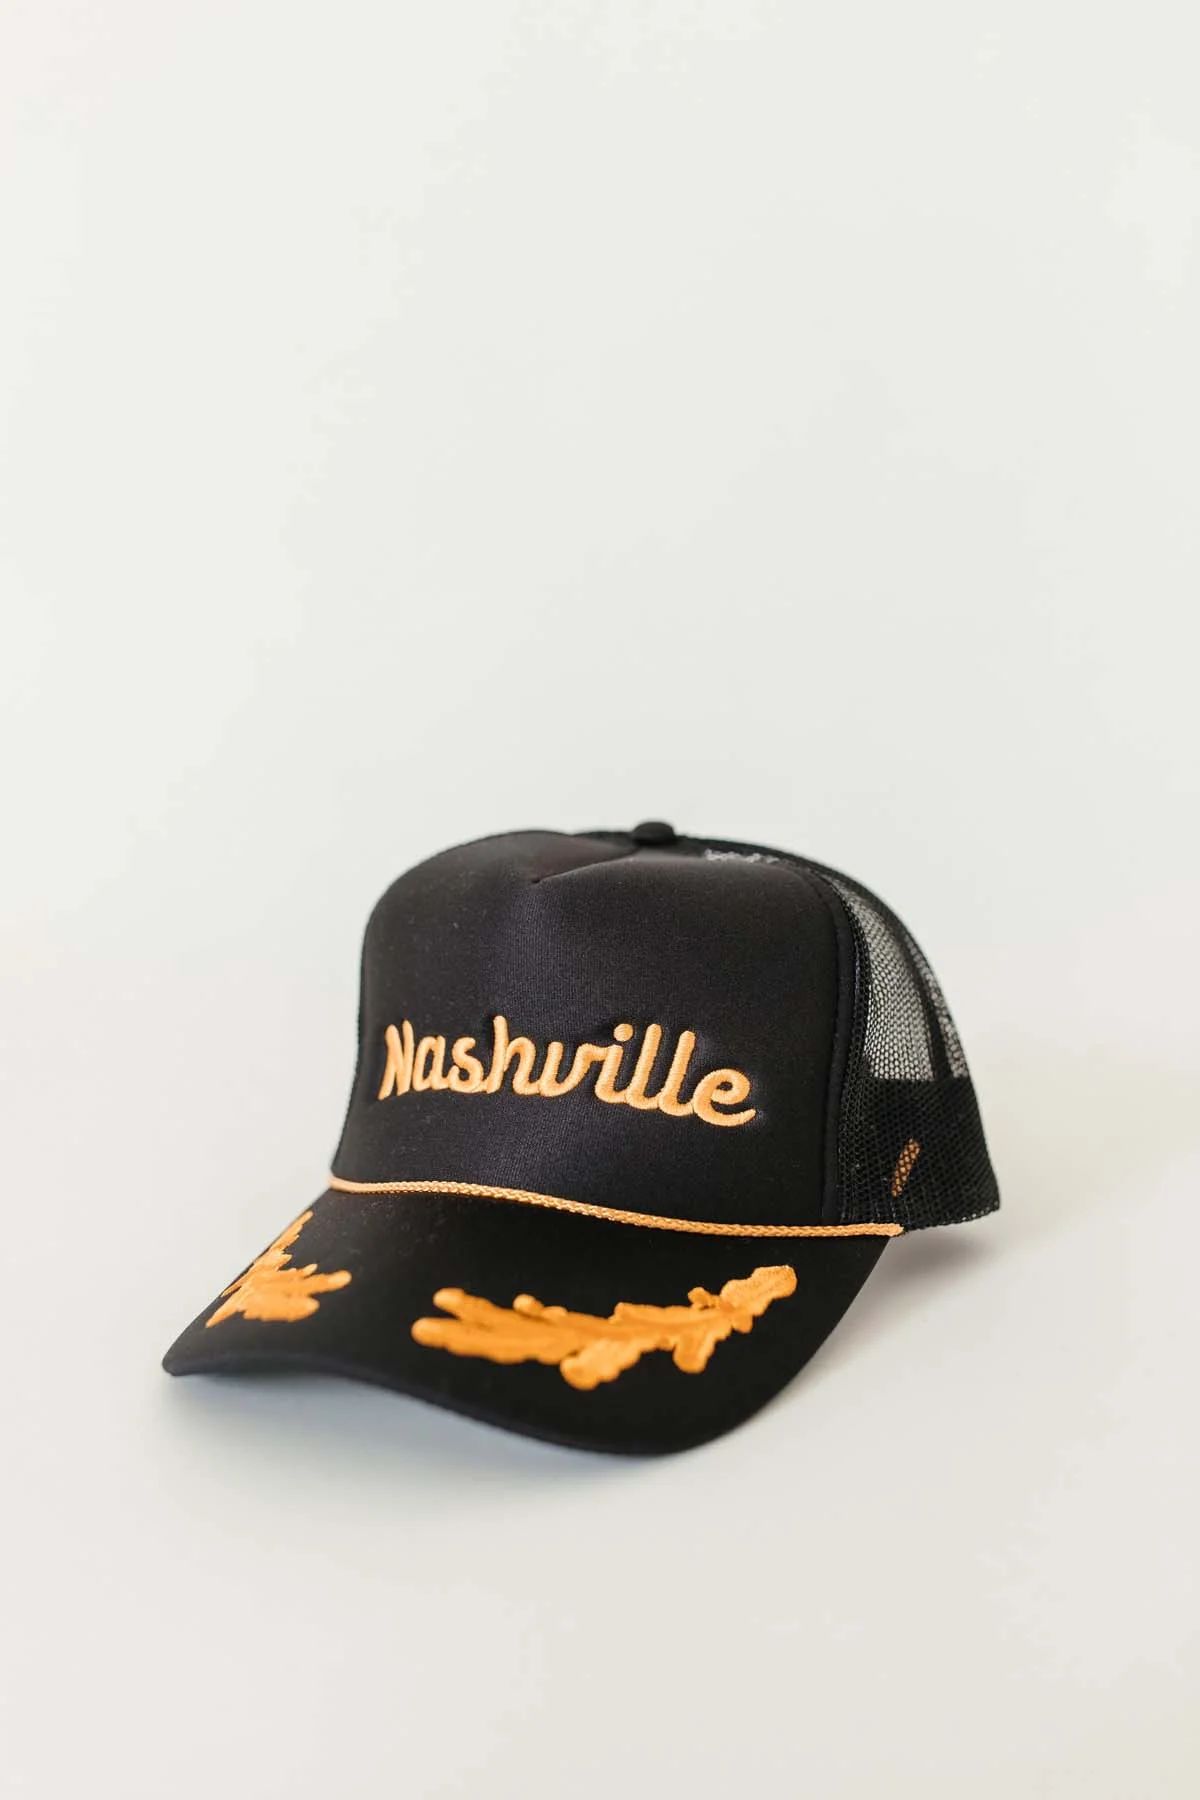 Nashville Trucker Hat | The Post